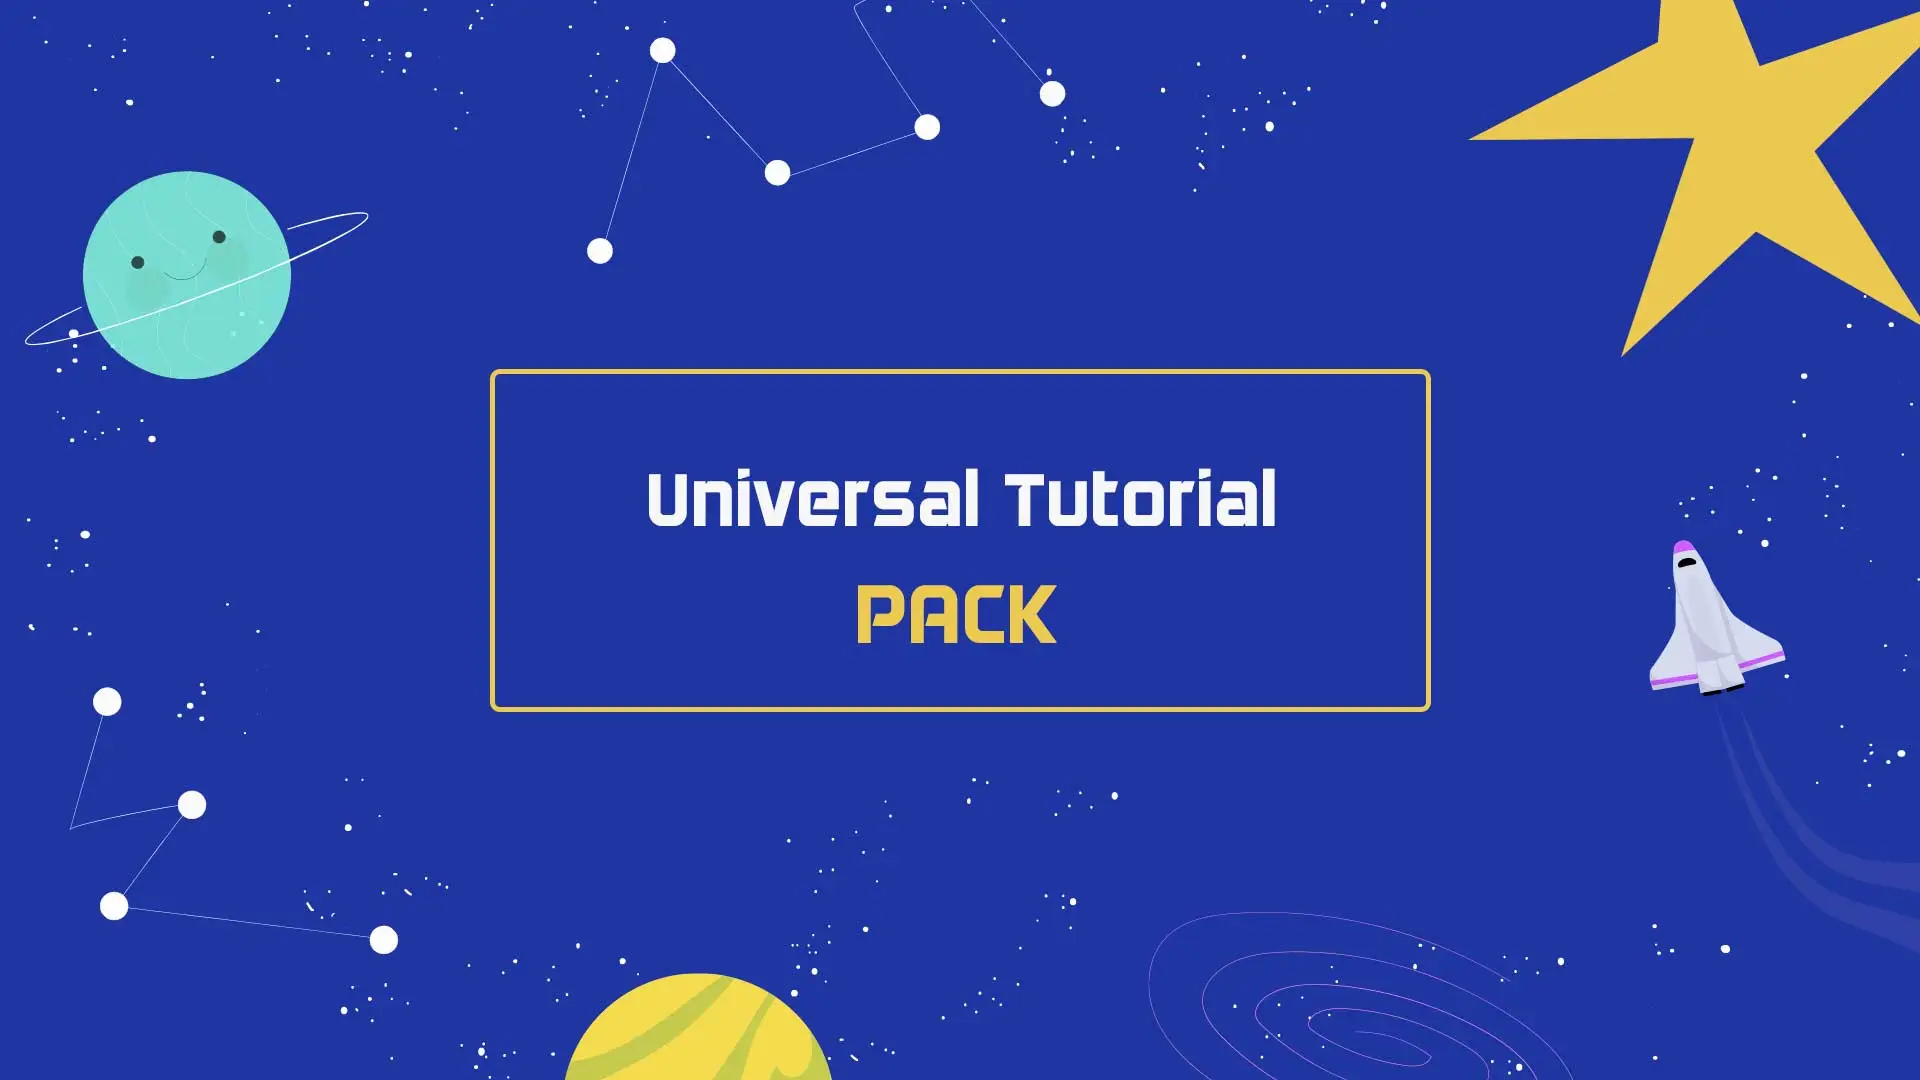 Universal Tutorial Pack